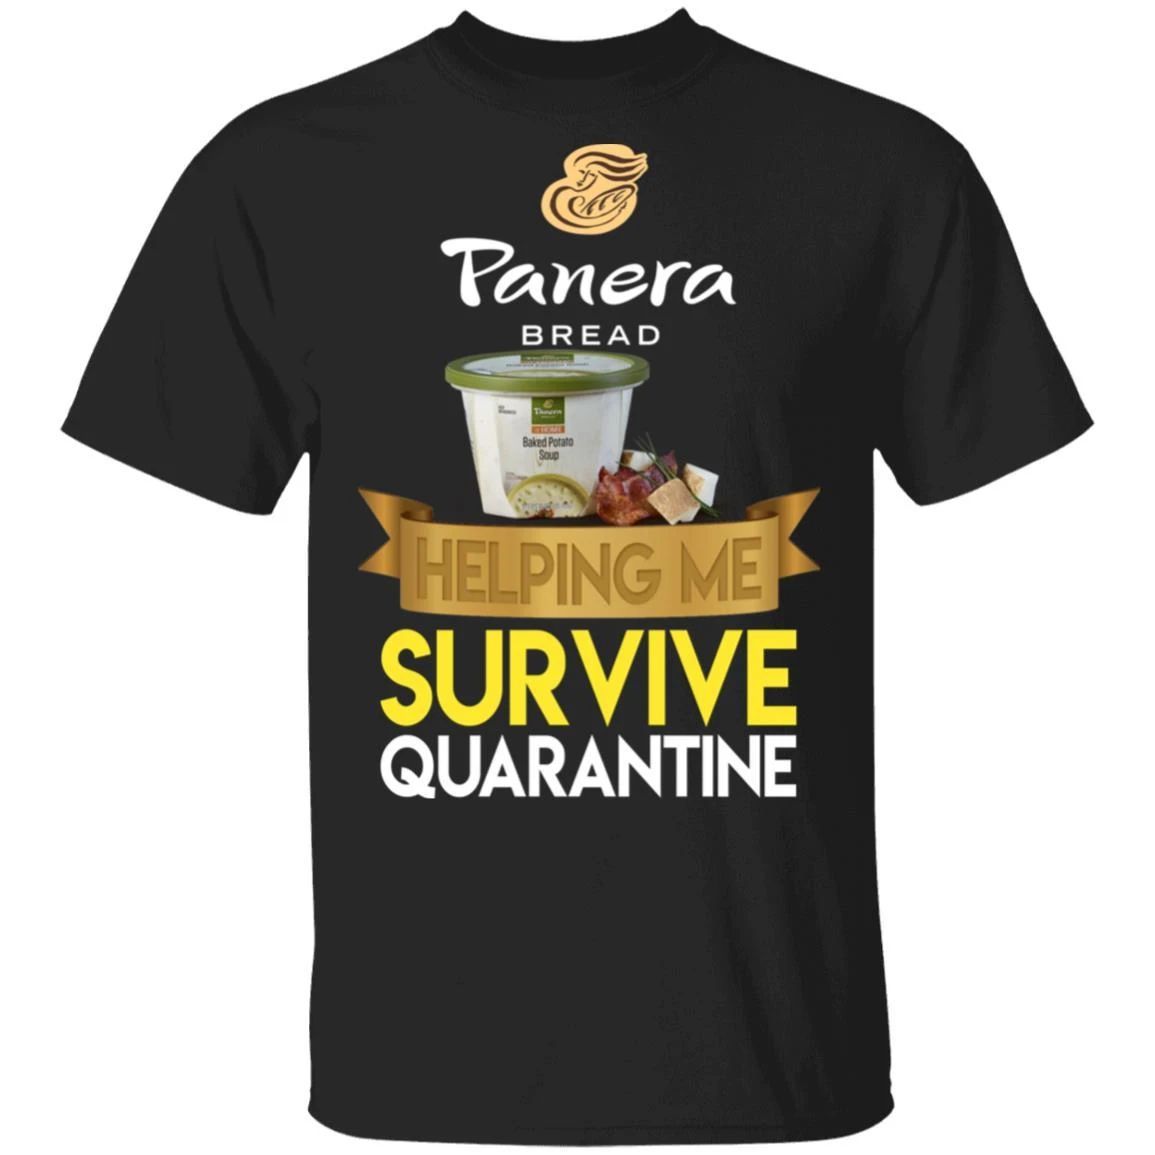 Panera Bread Helping Me Survive Quarantine T-shirt